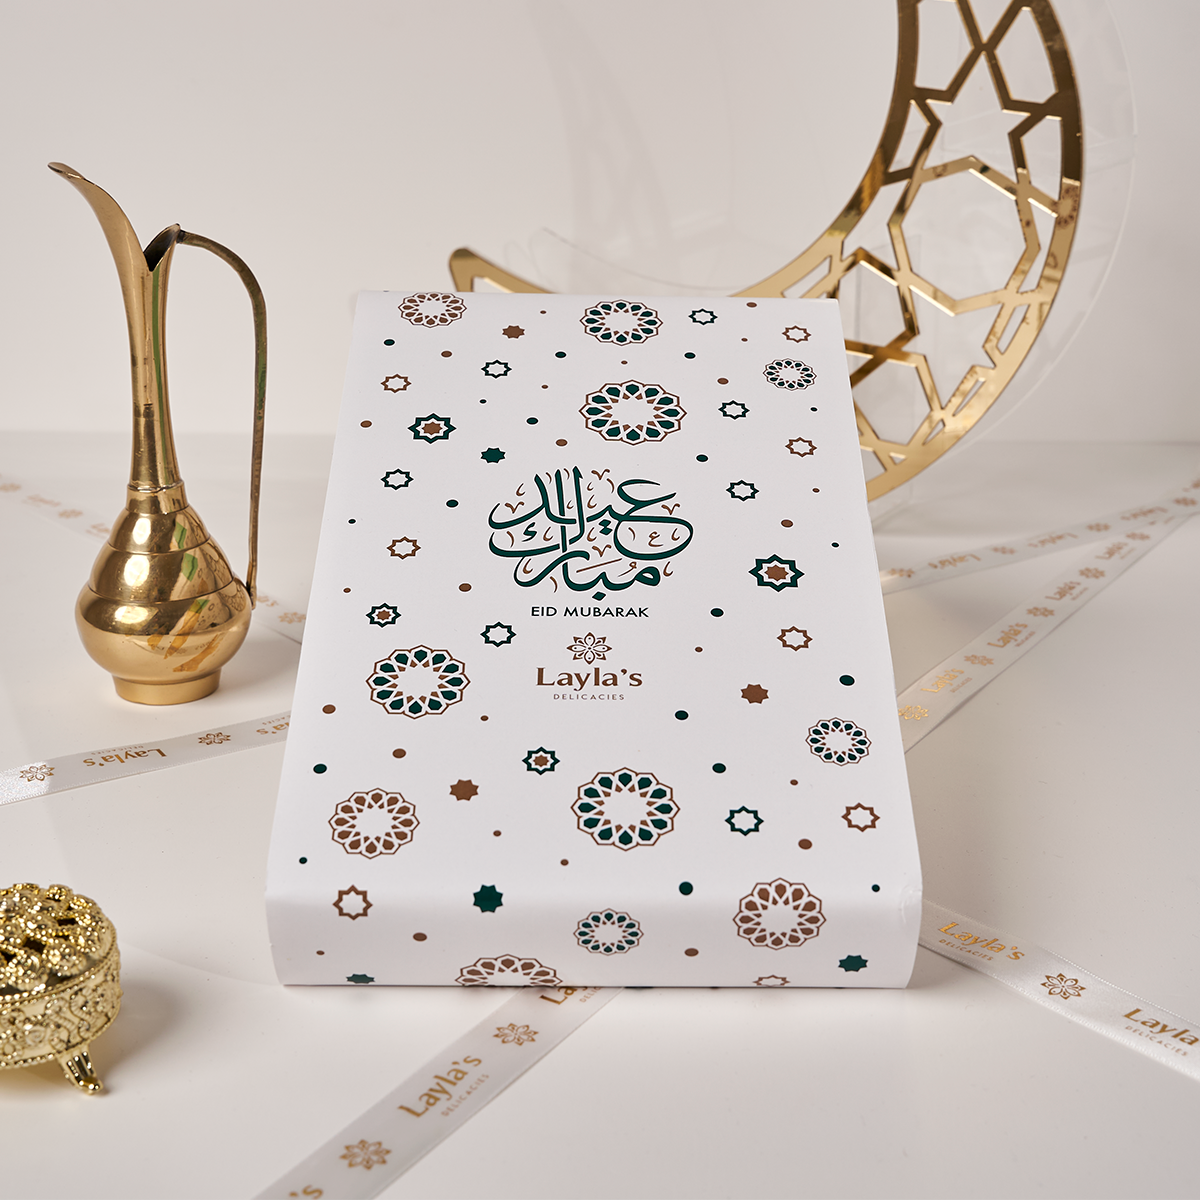 Eid Mubarak Gift Box, 15 pc.